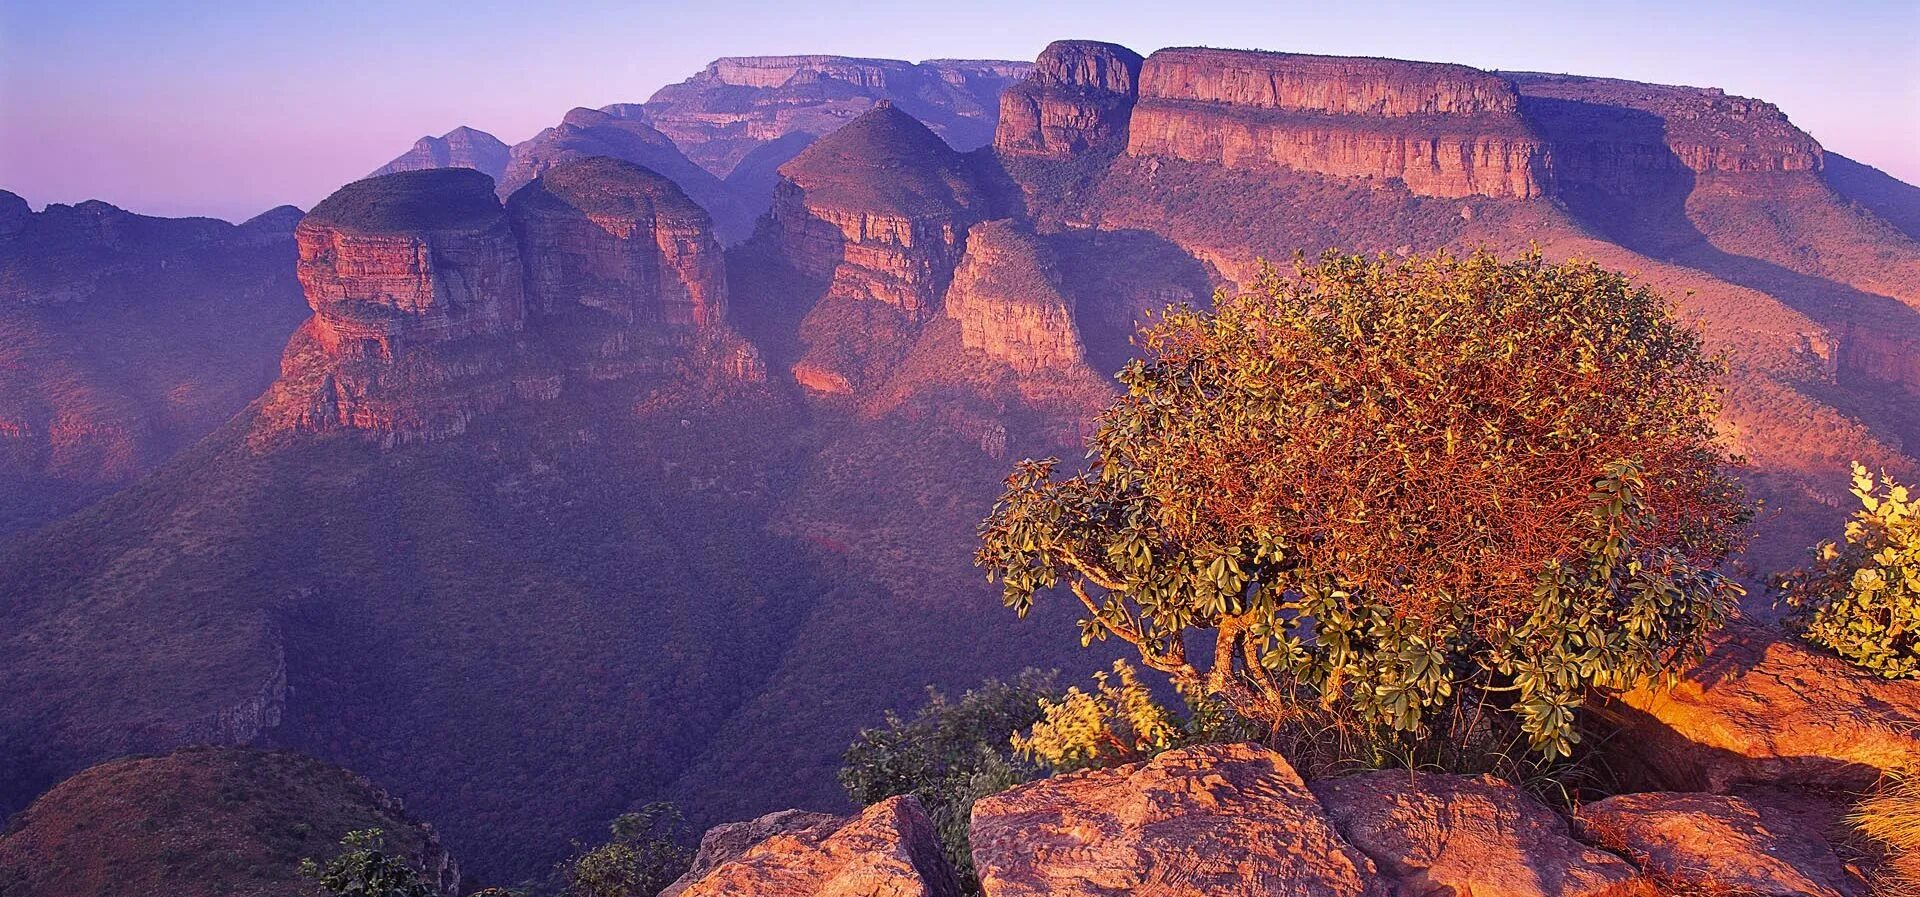 Красивая страна африки. Капская провинция ЮАР пейзажи. ЮАР Саванна. Южная Африка Кейптаун природа. Драконовы горы ЮАР каньон.